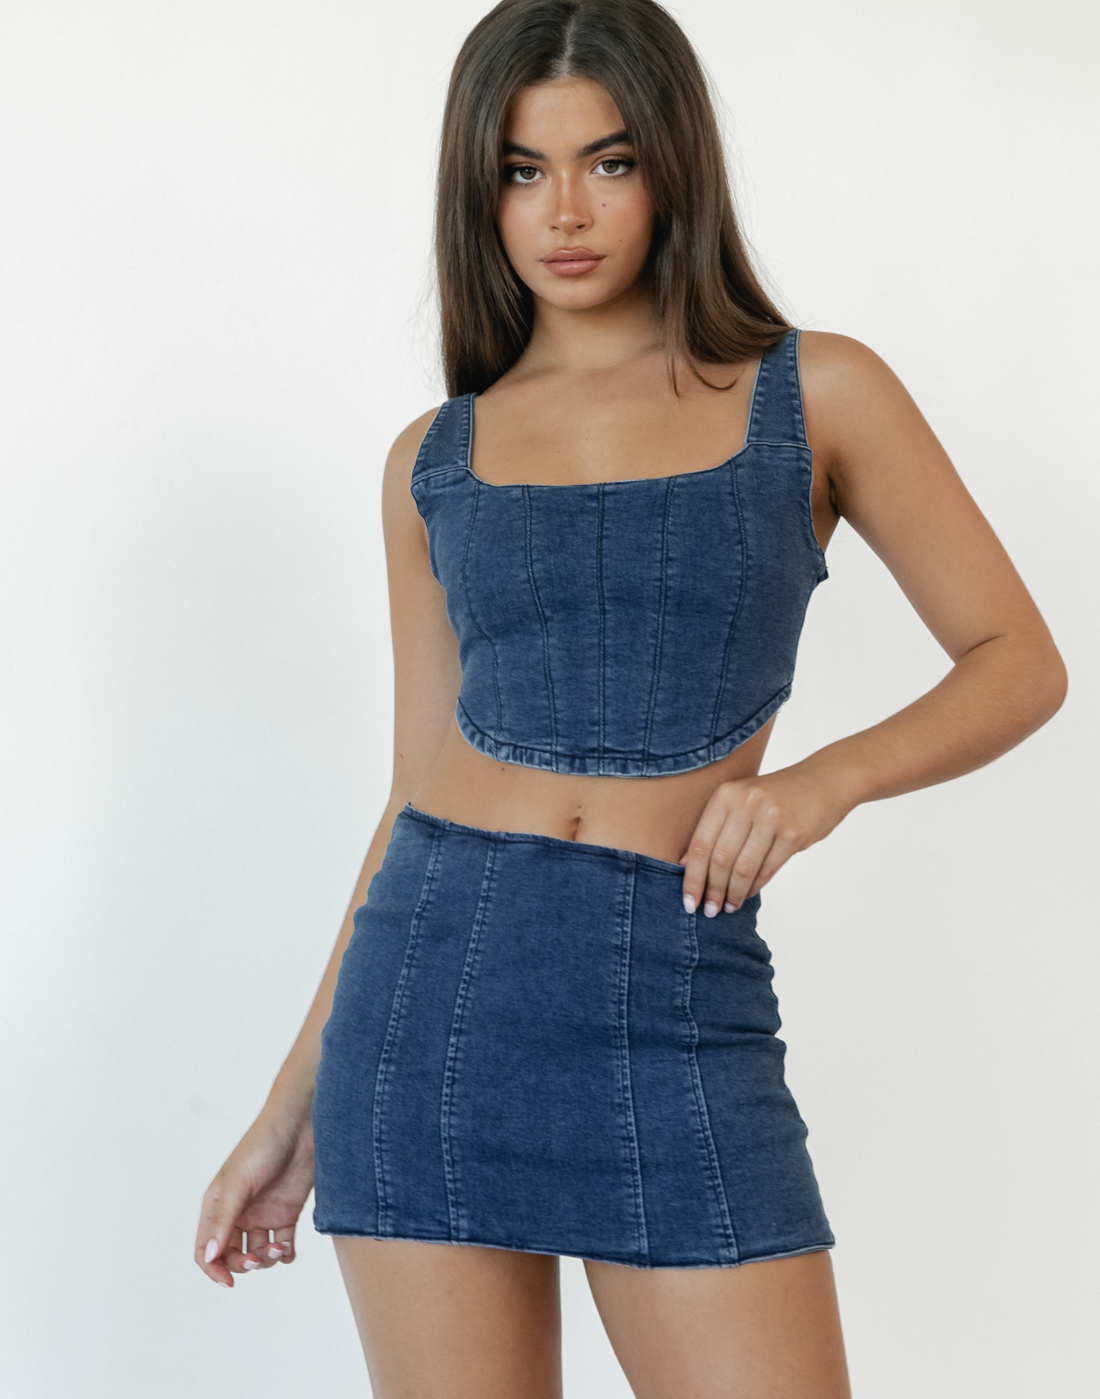 Focus Mini Skirt (Denim) - Denim Mini Skirt - Women's Outfit Sets - Charcoal Clothing